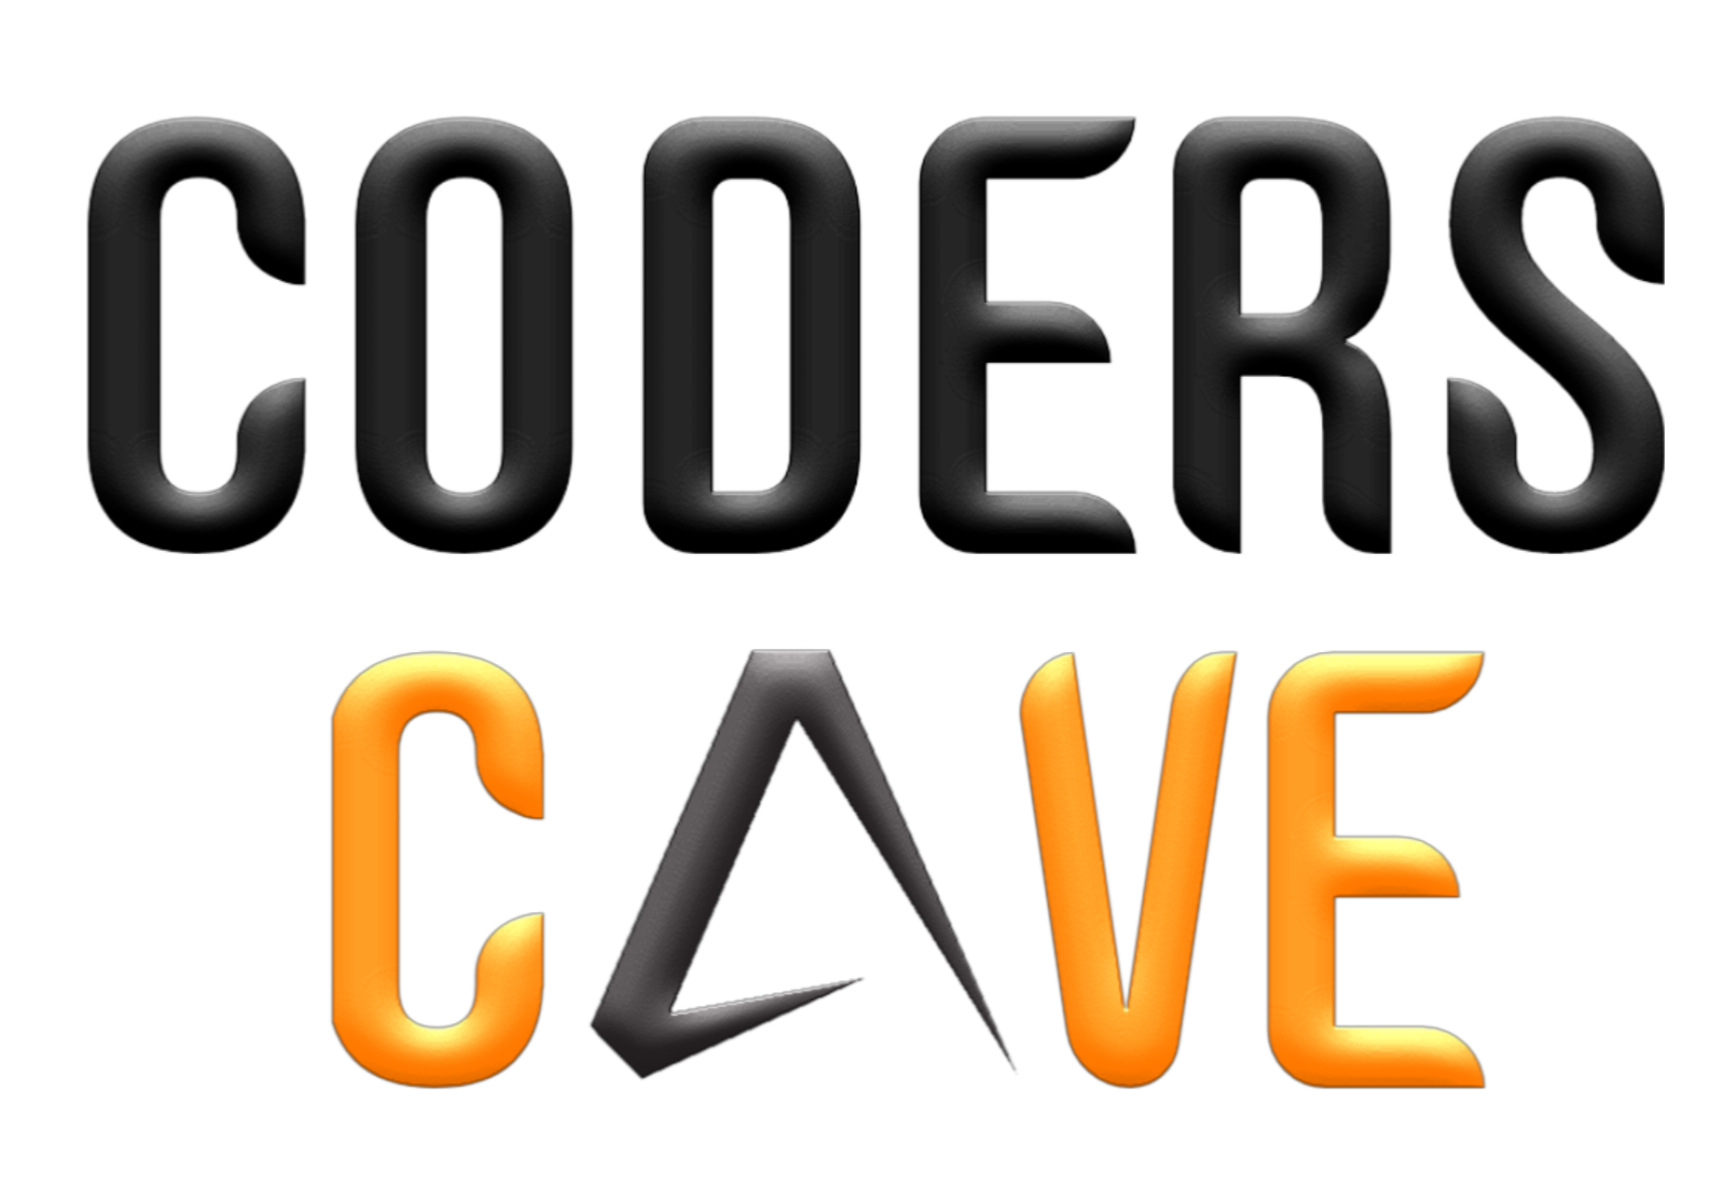 CodersCave Logo